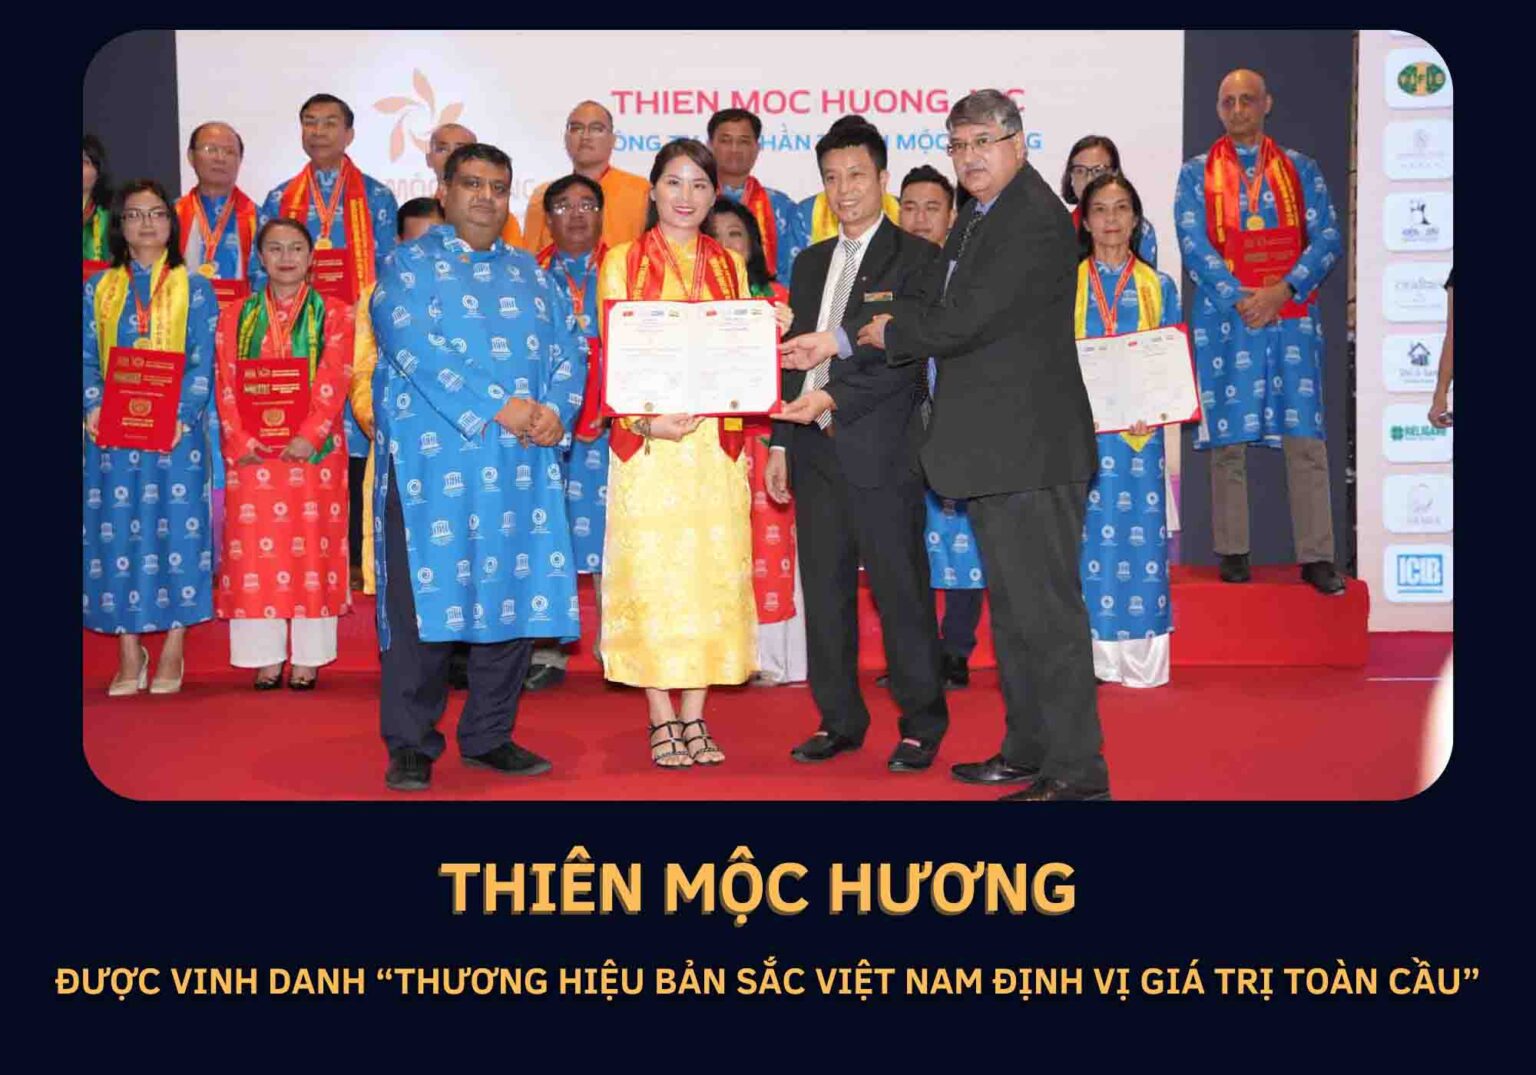 Copy of Thien Moc Huong Agarwood Jewelry - unesco